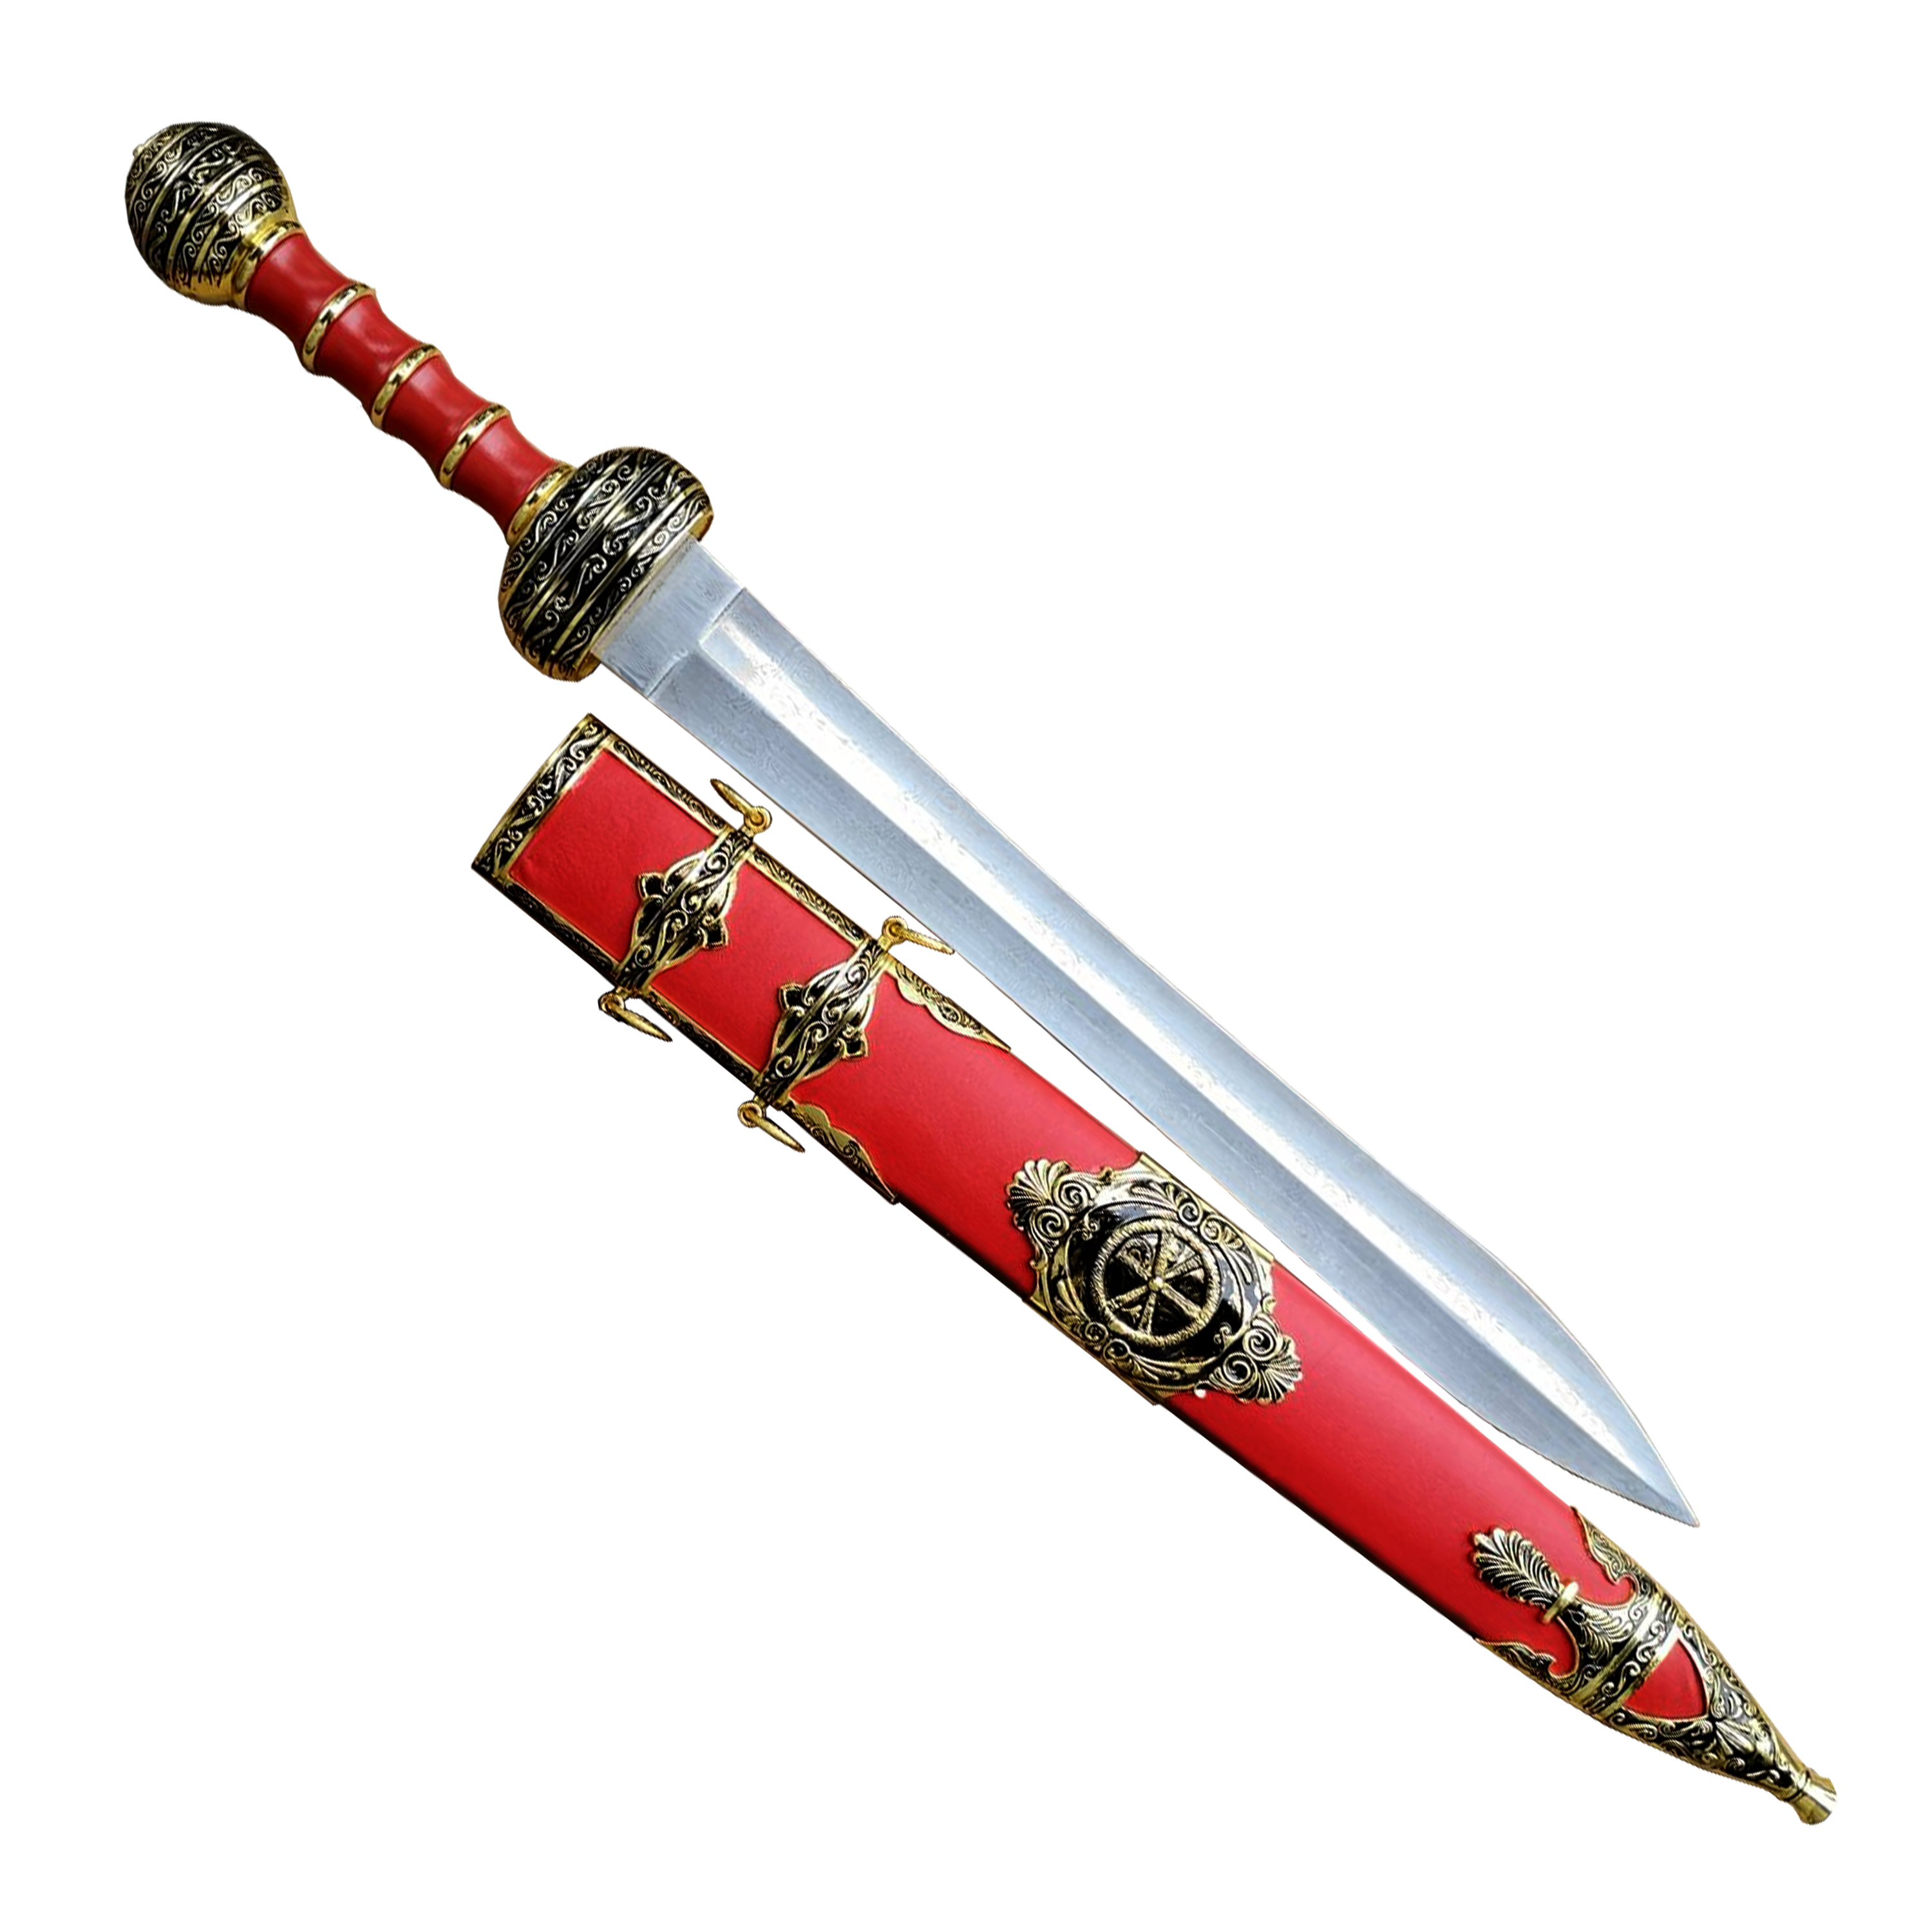 Red Roman gladius sword with sheath